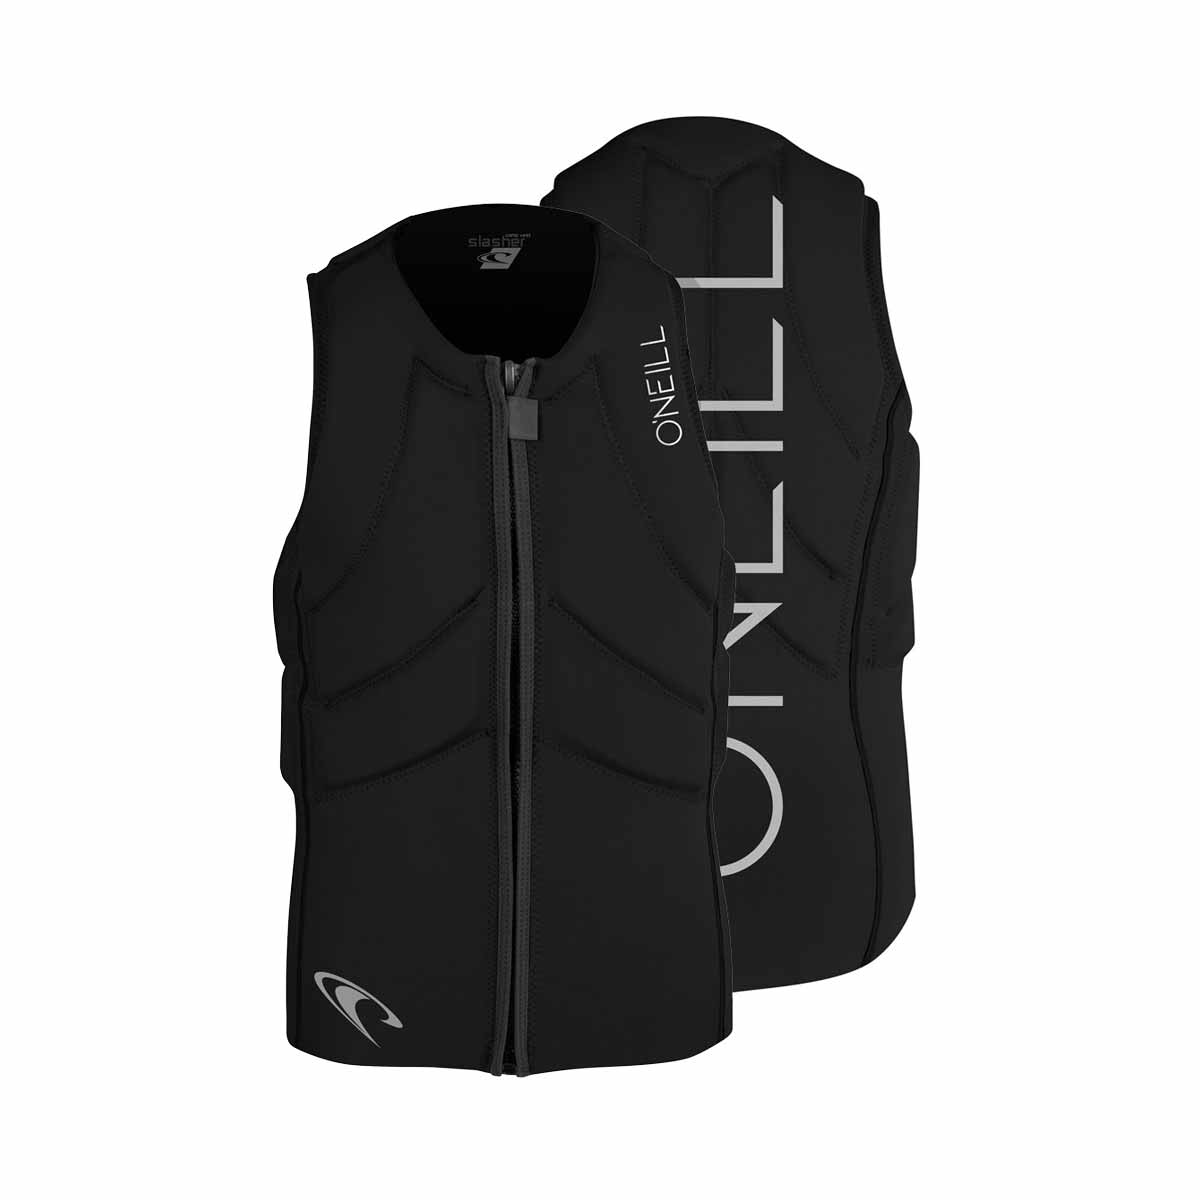 O'Neill Slasher Harness vest – M